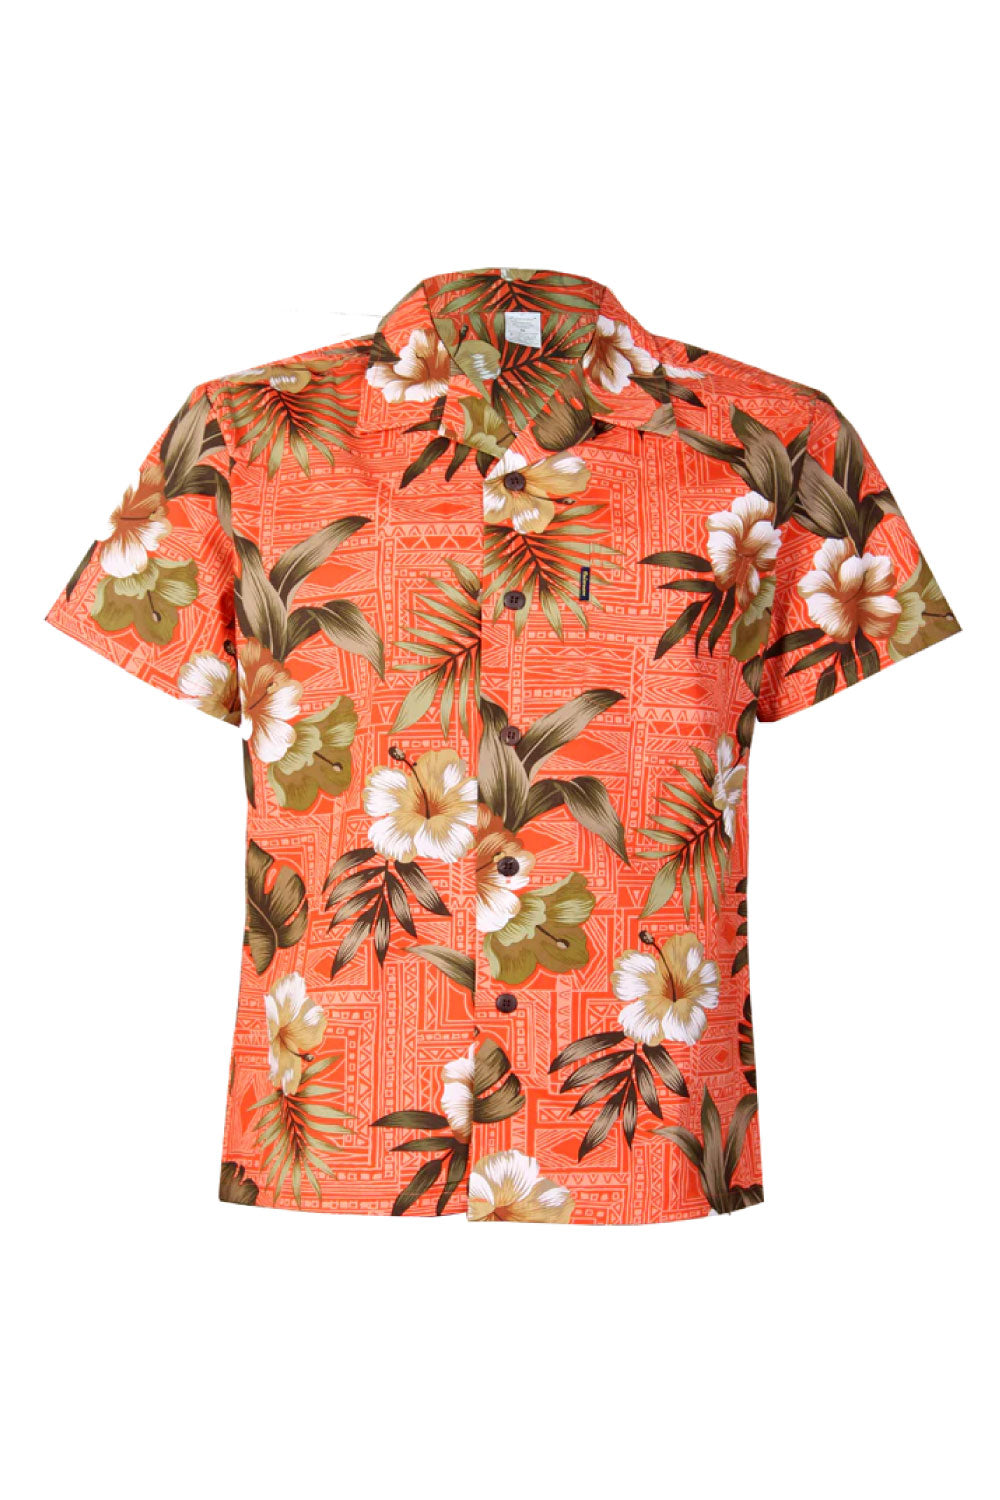 Image of the front of Palmwave's Brick Floral Aloha Men's Shirt.